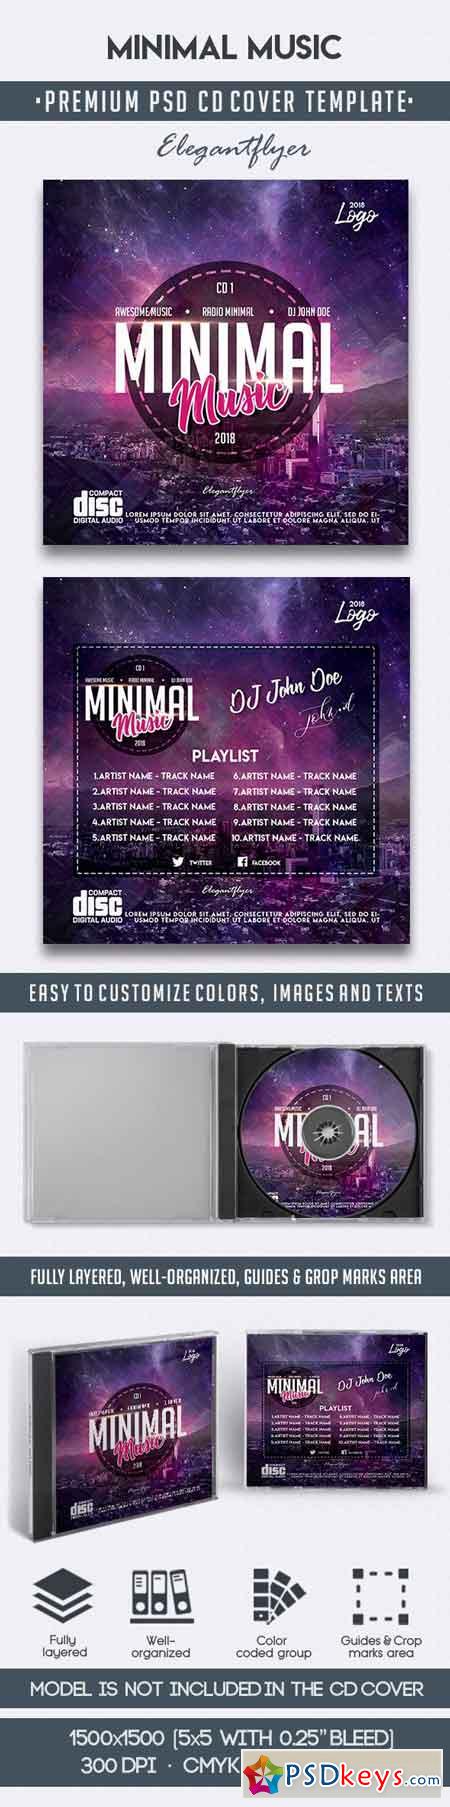 Minimal Music CD Cover